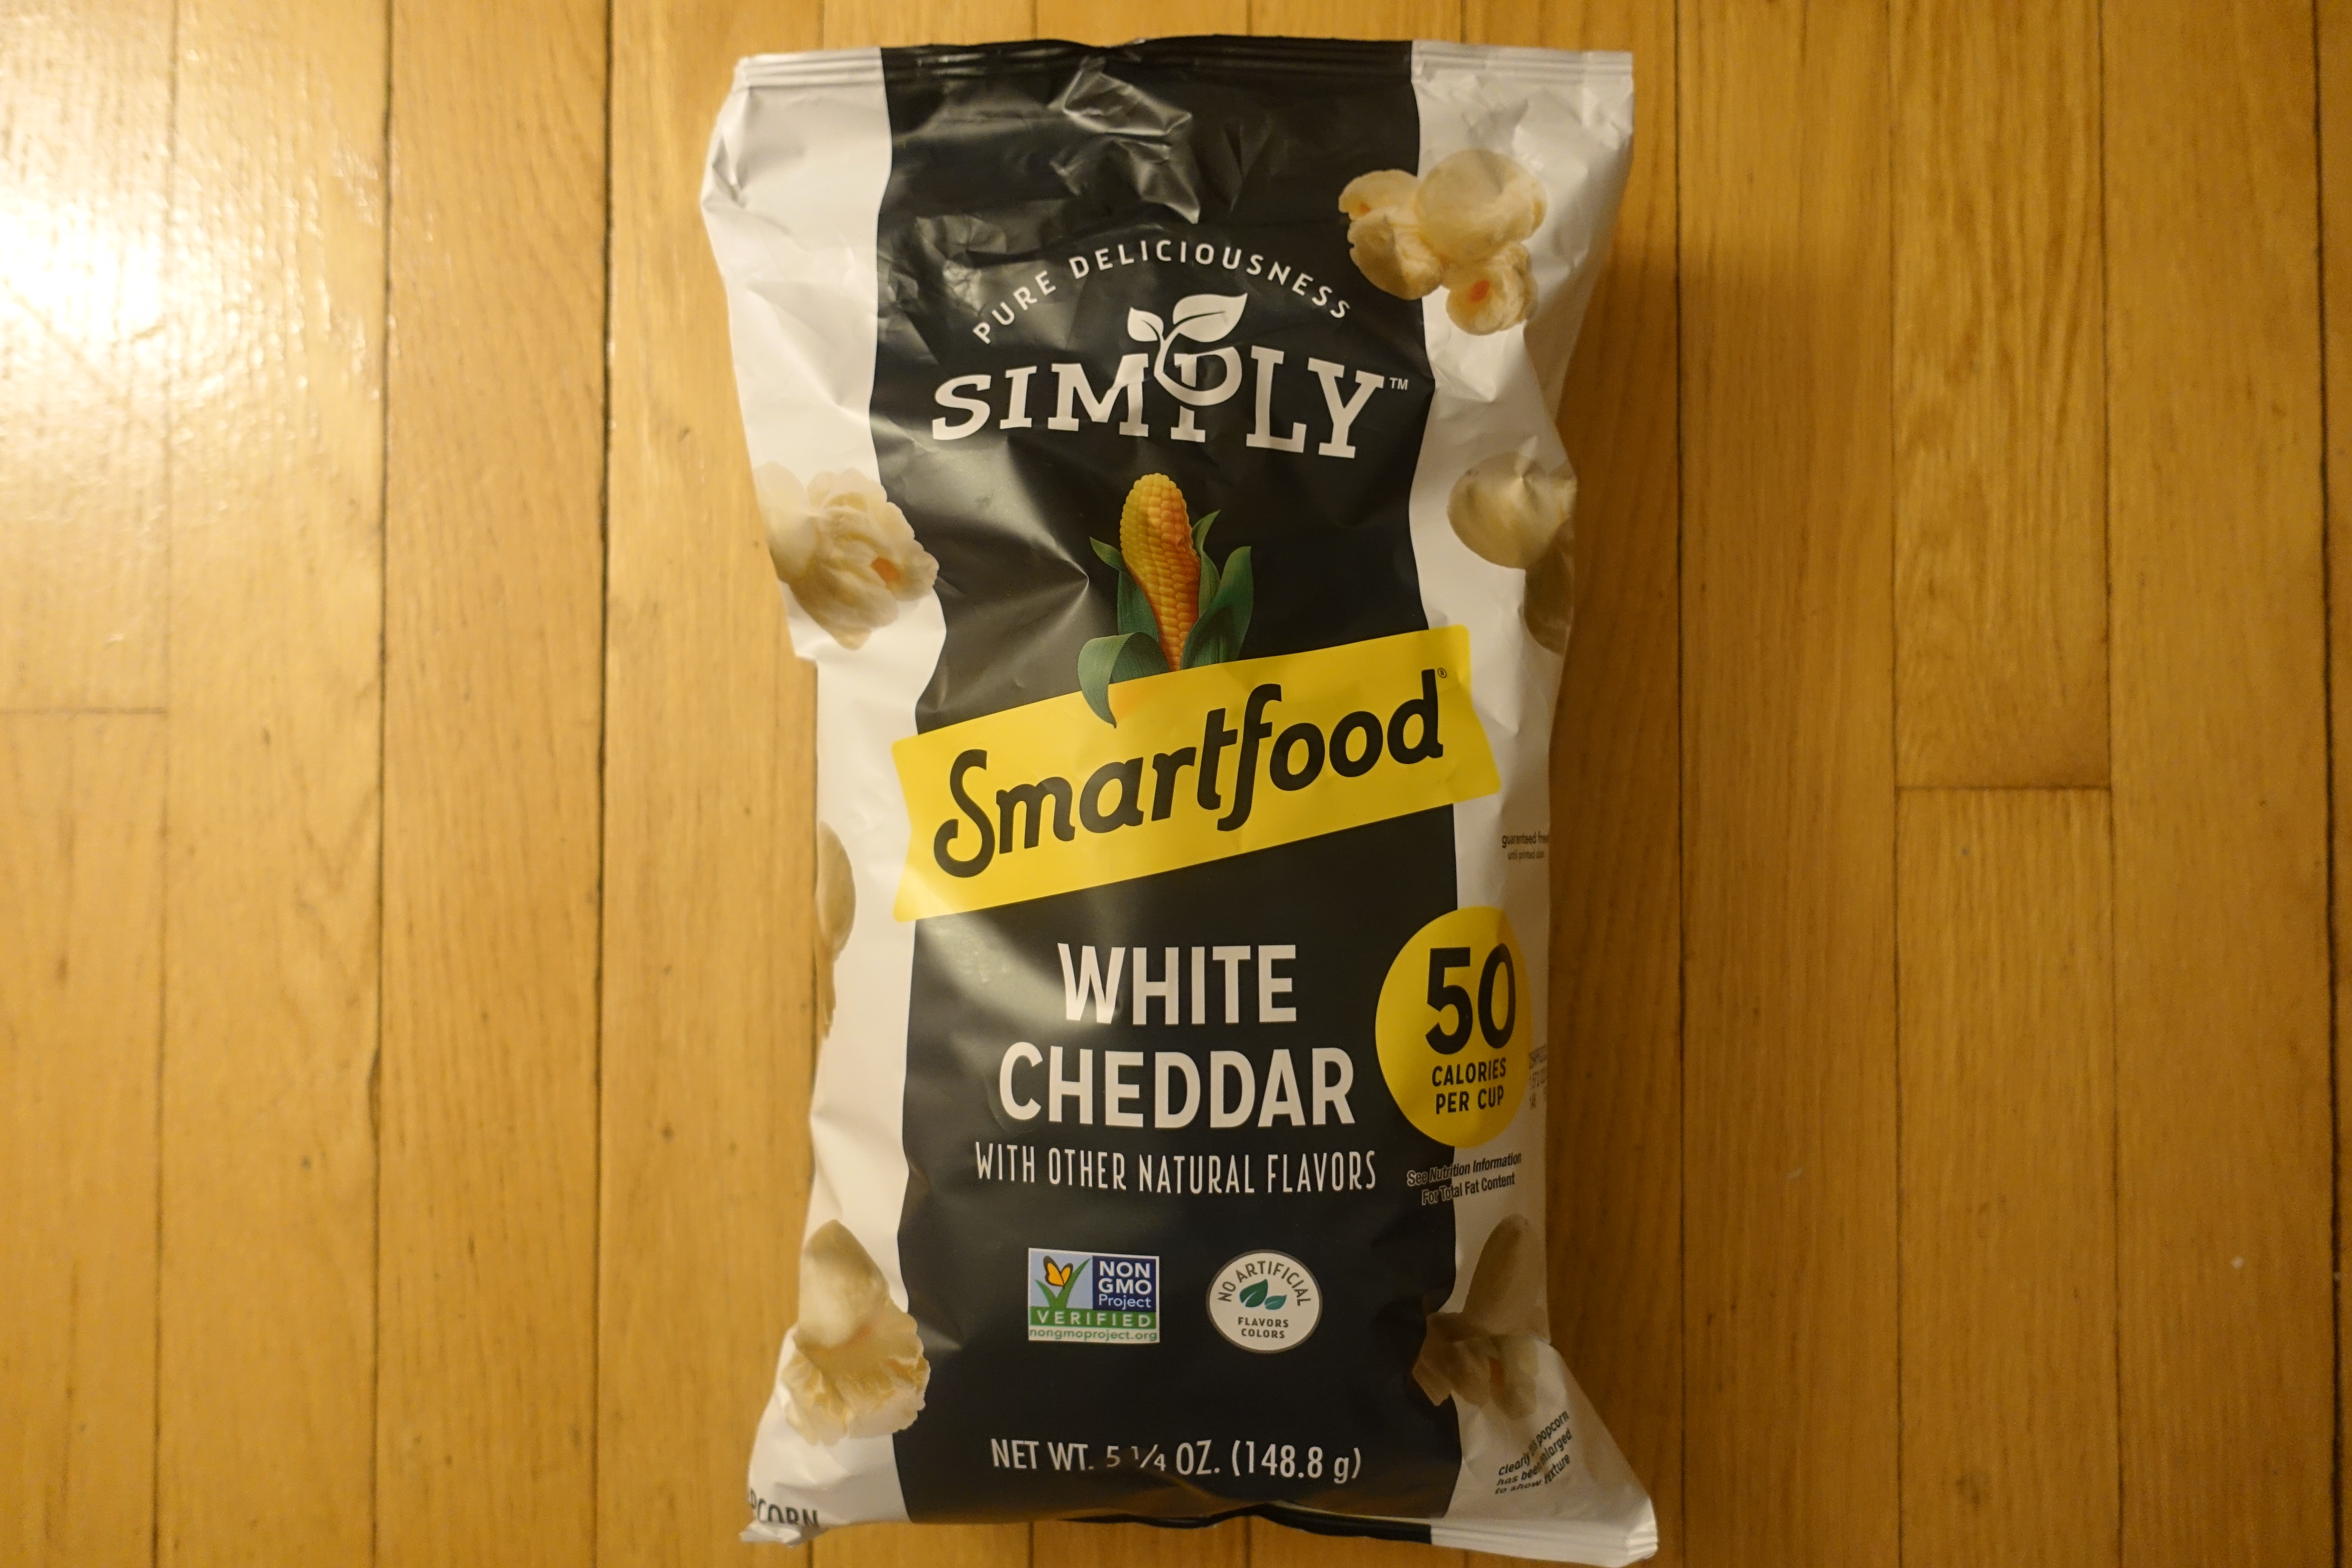 Simply Smartfood White Cheddar